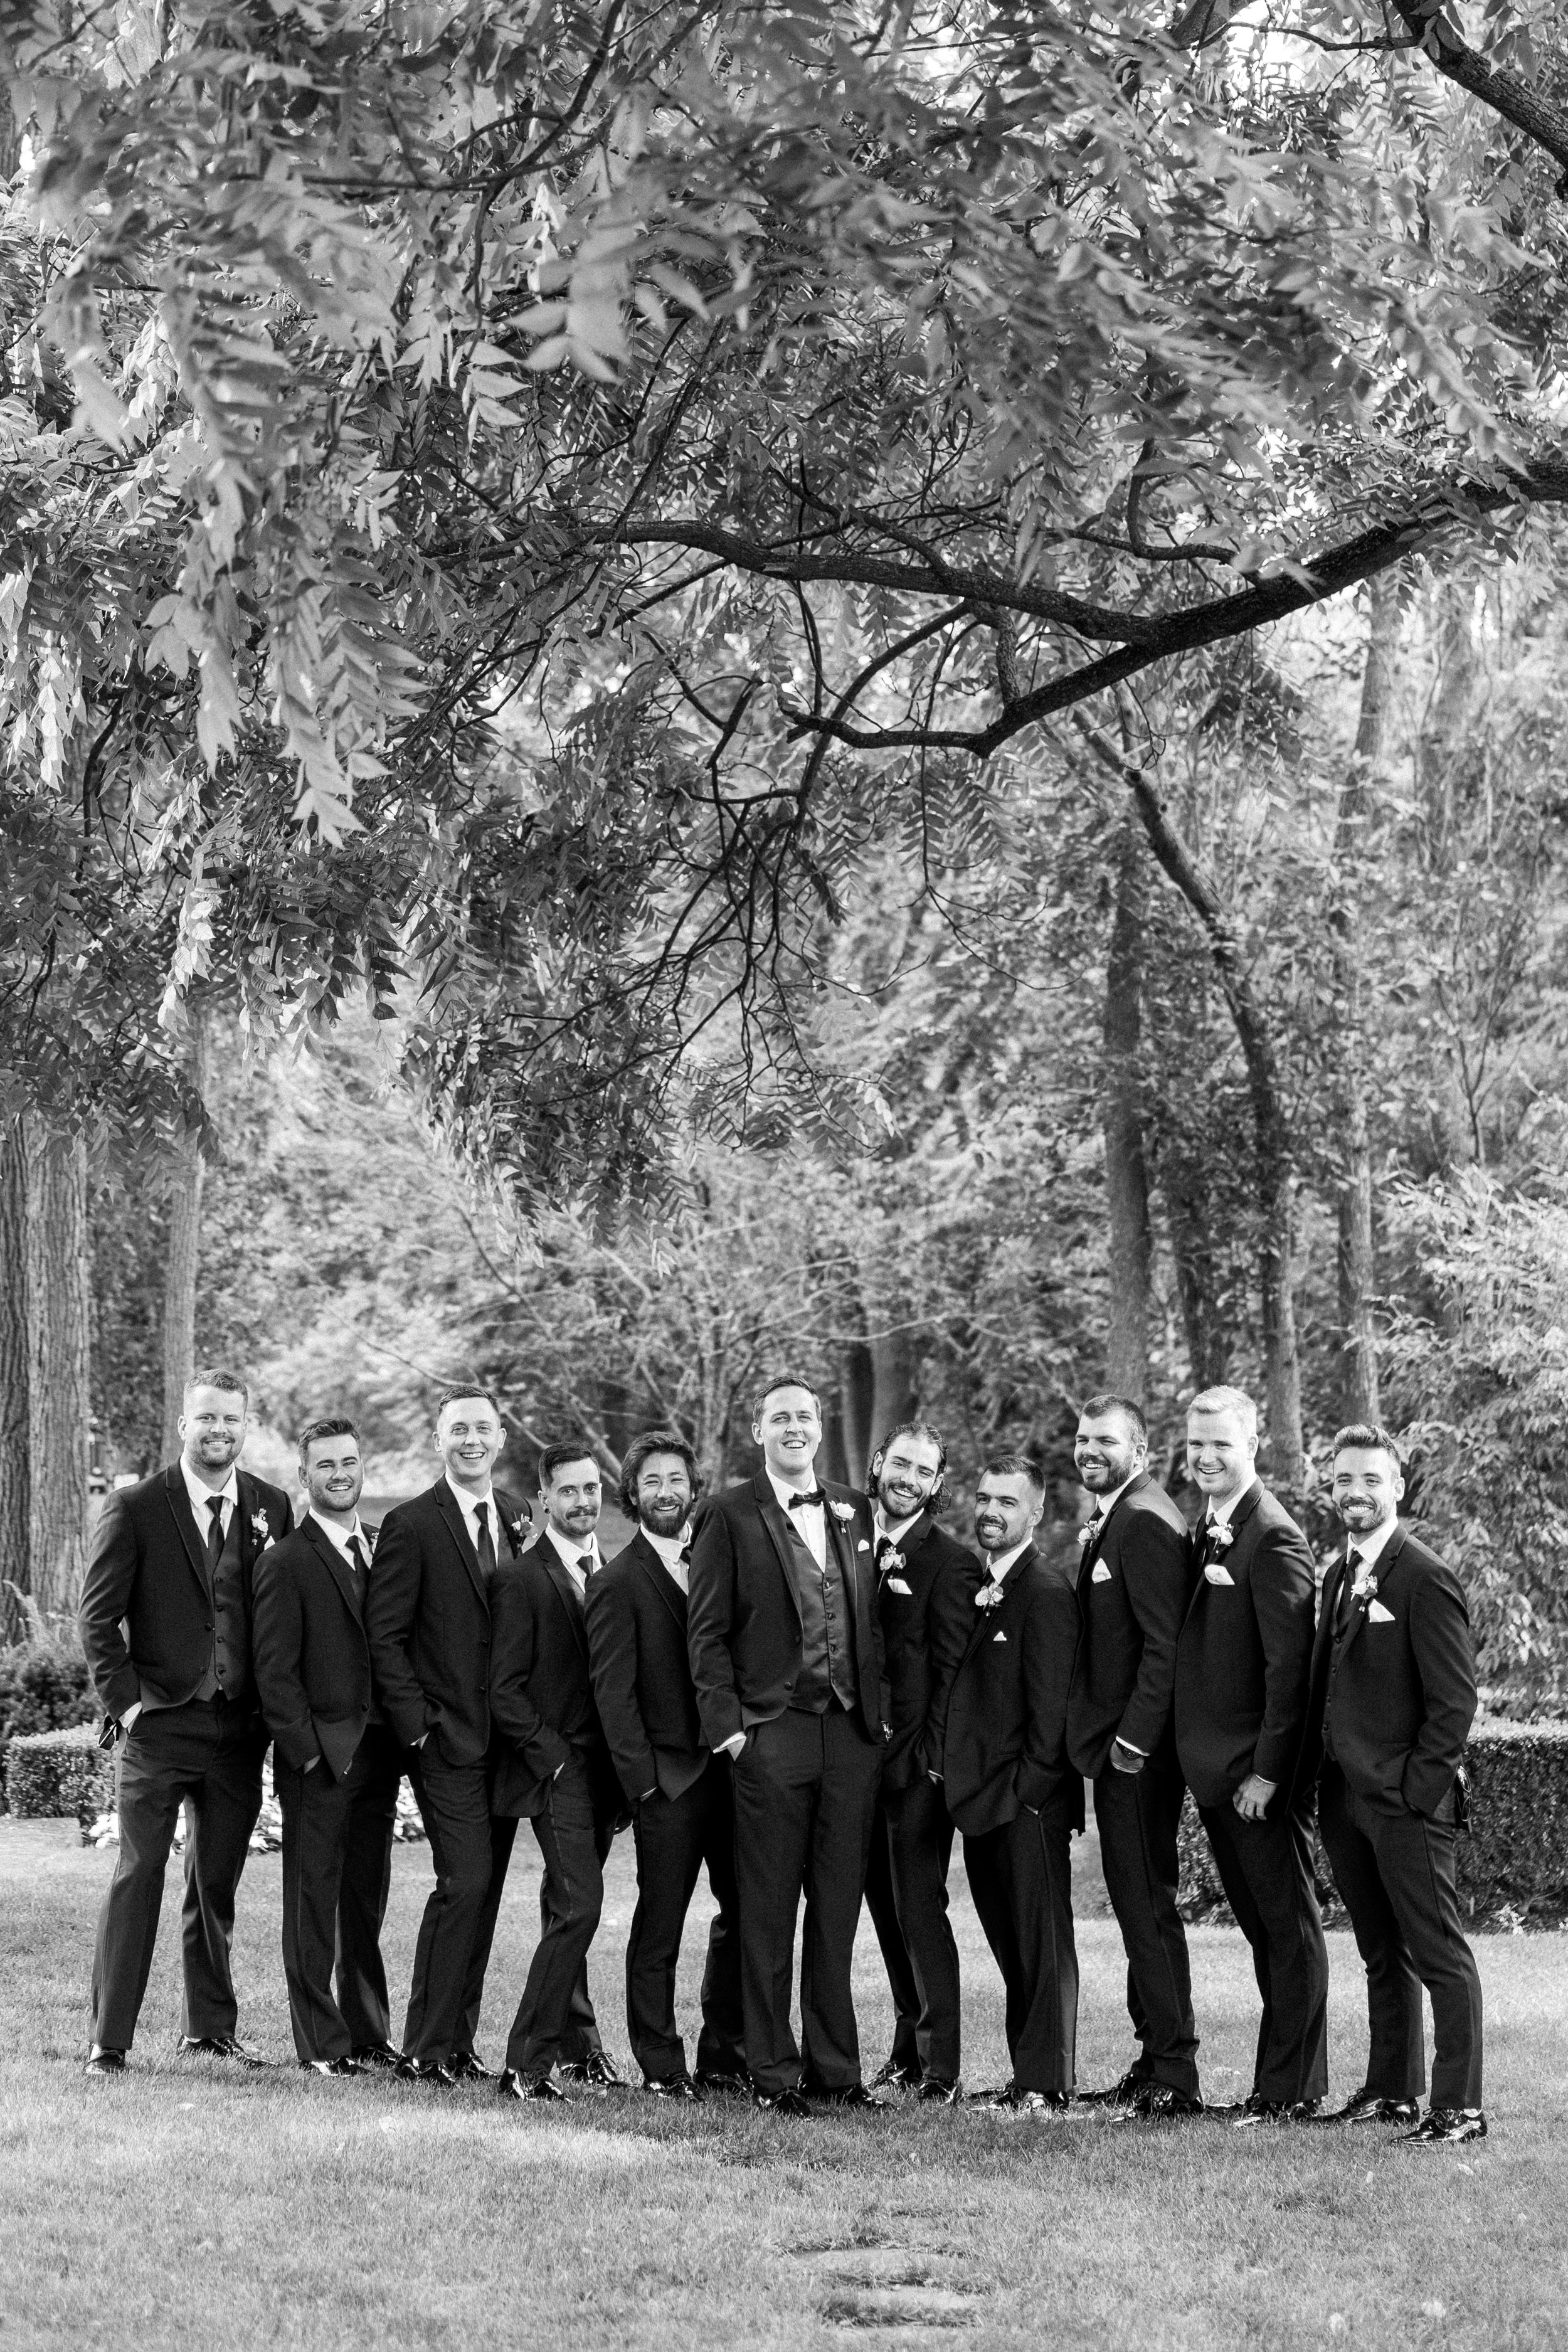 brittany-williams-photography-black-tie-wedding.jpg